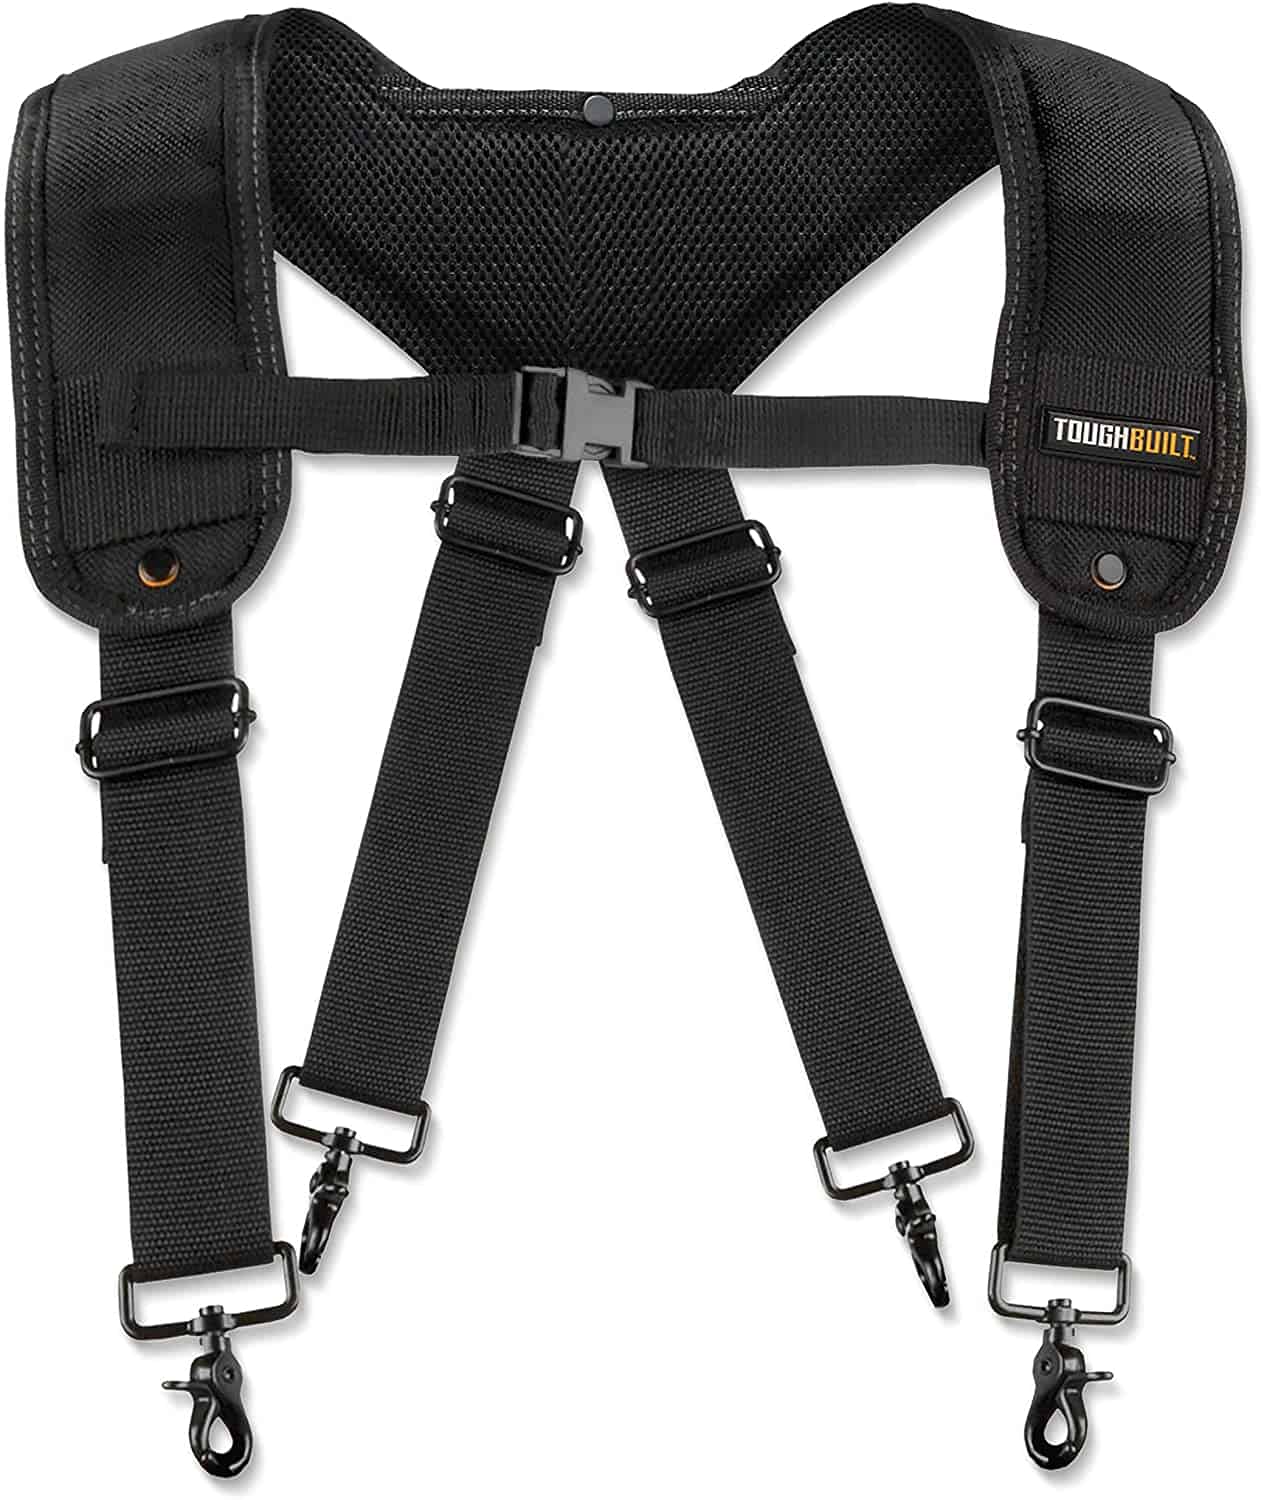 Best overall tool belt suspenders- ToughBuilt Padded Suspenders